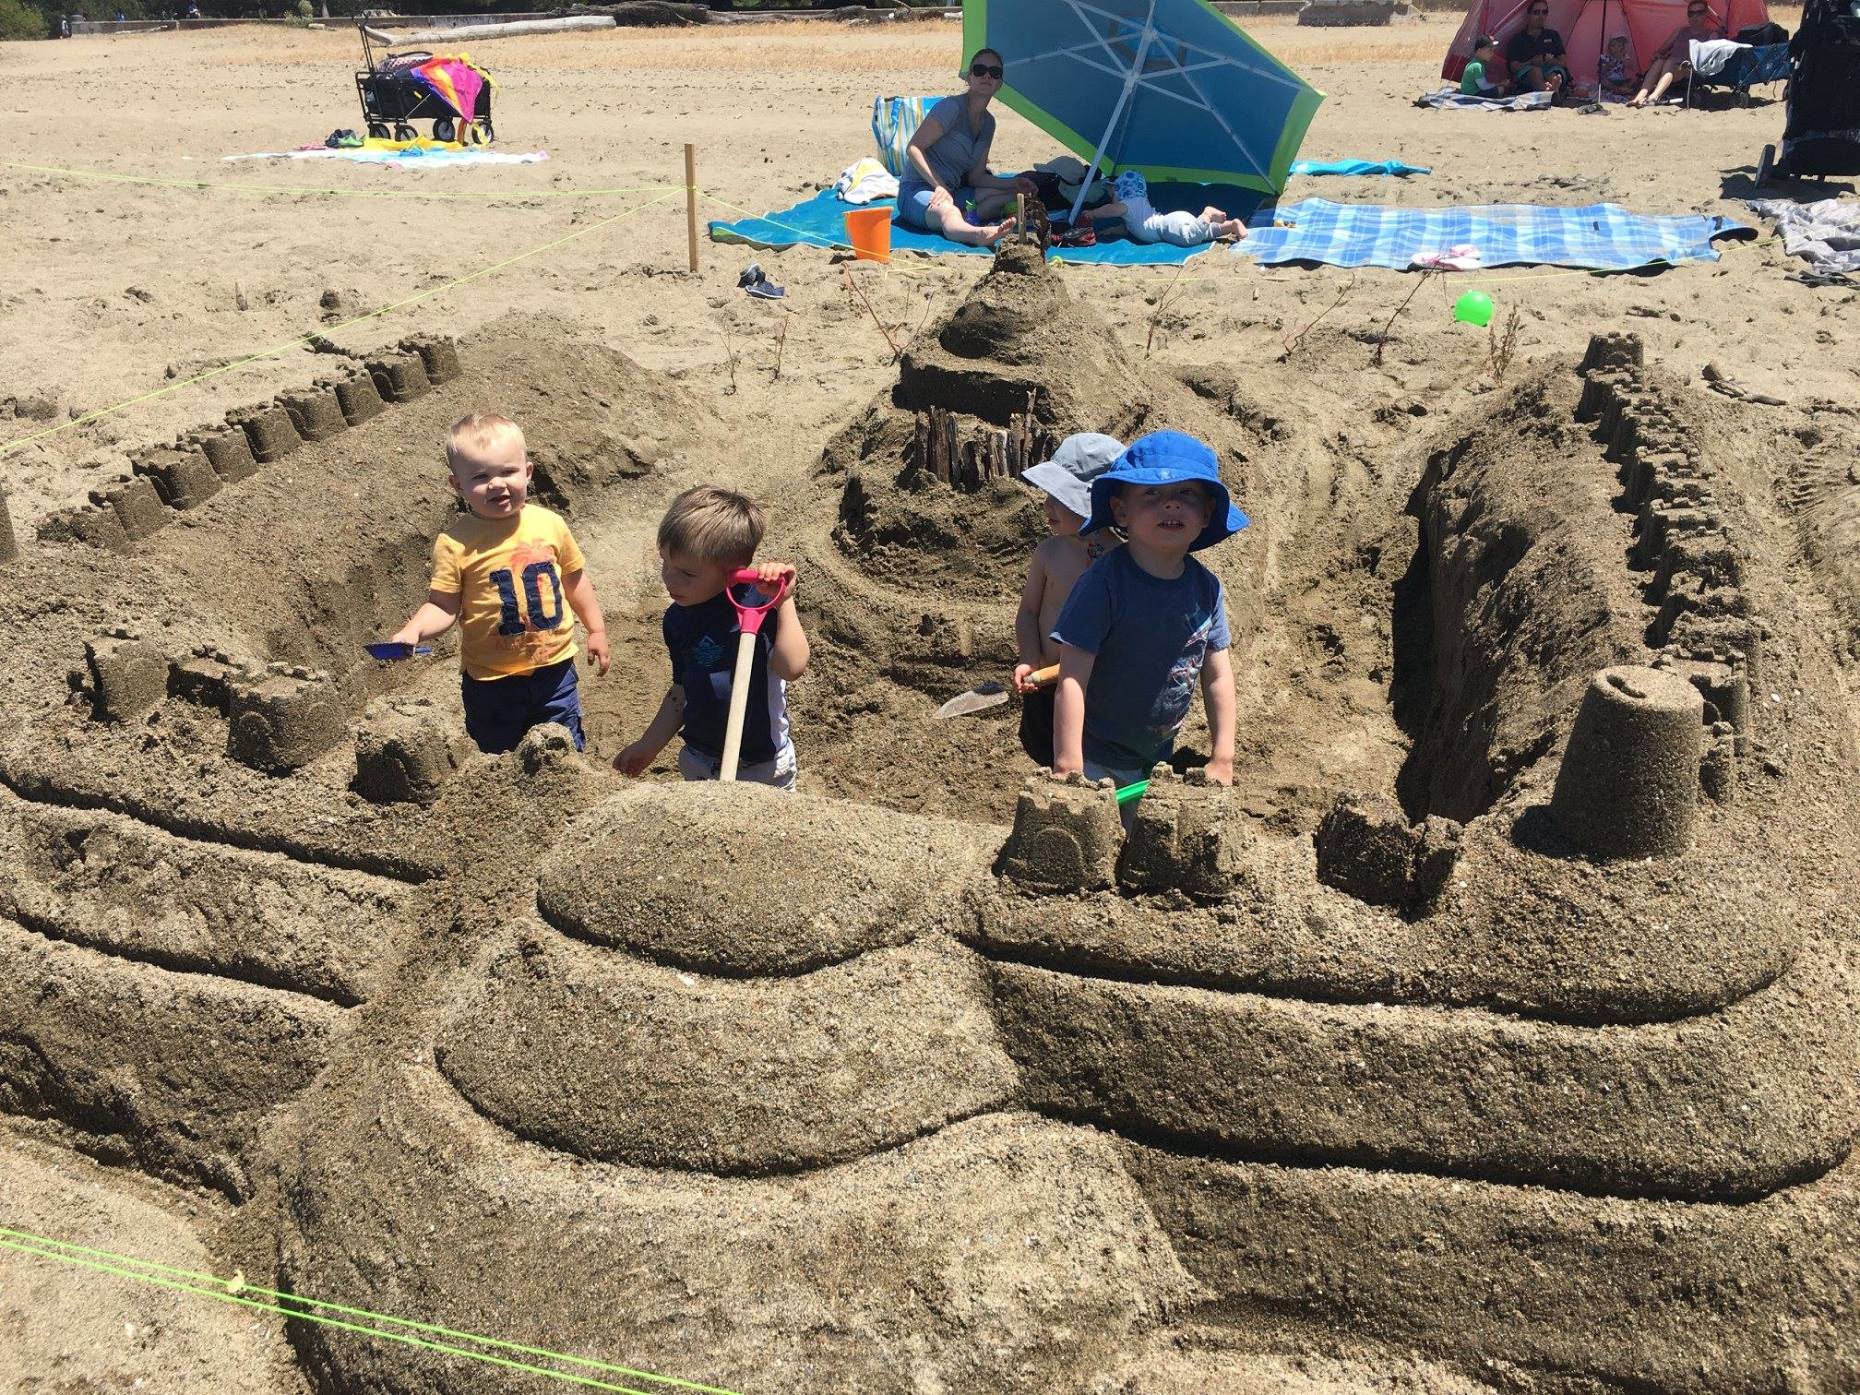 June 10: Free Annual Sand Castle & Sculpture Contest